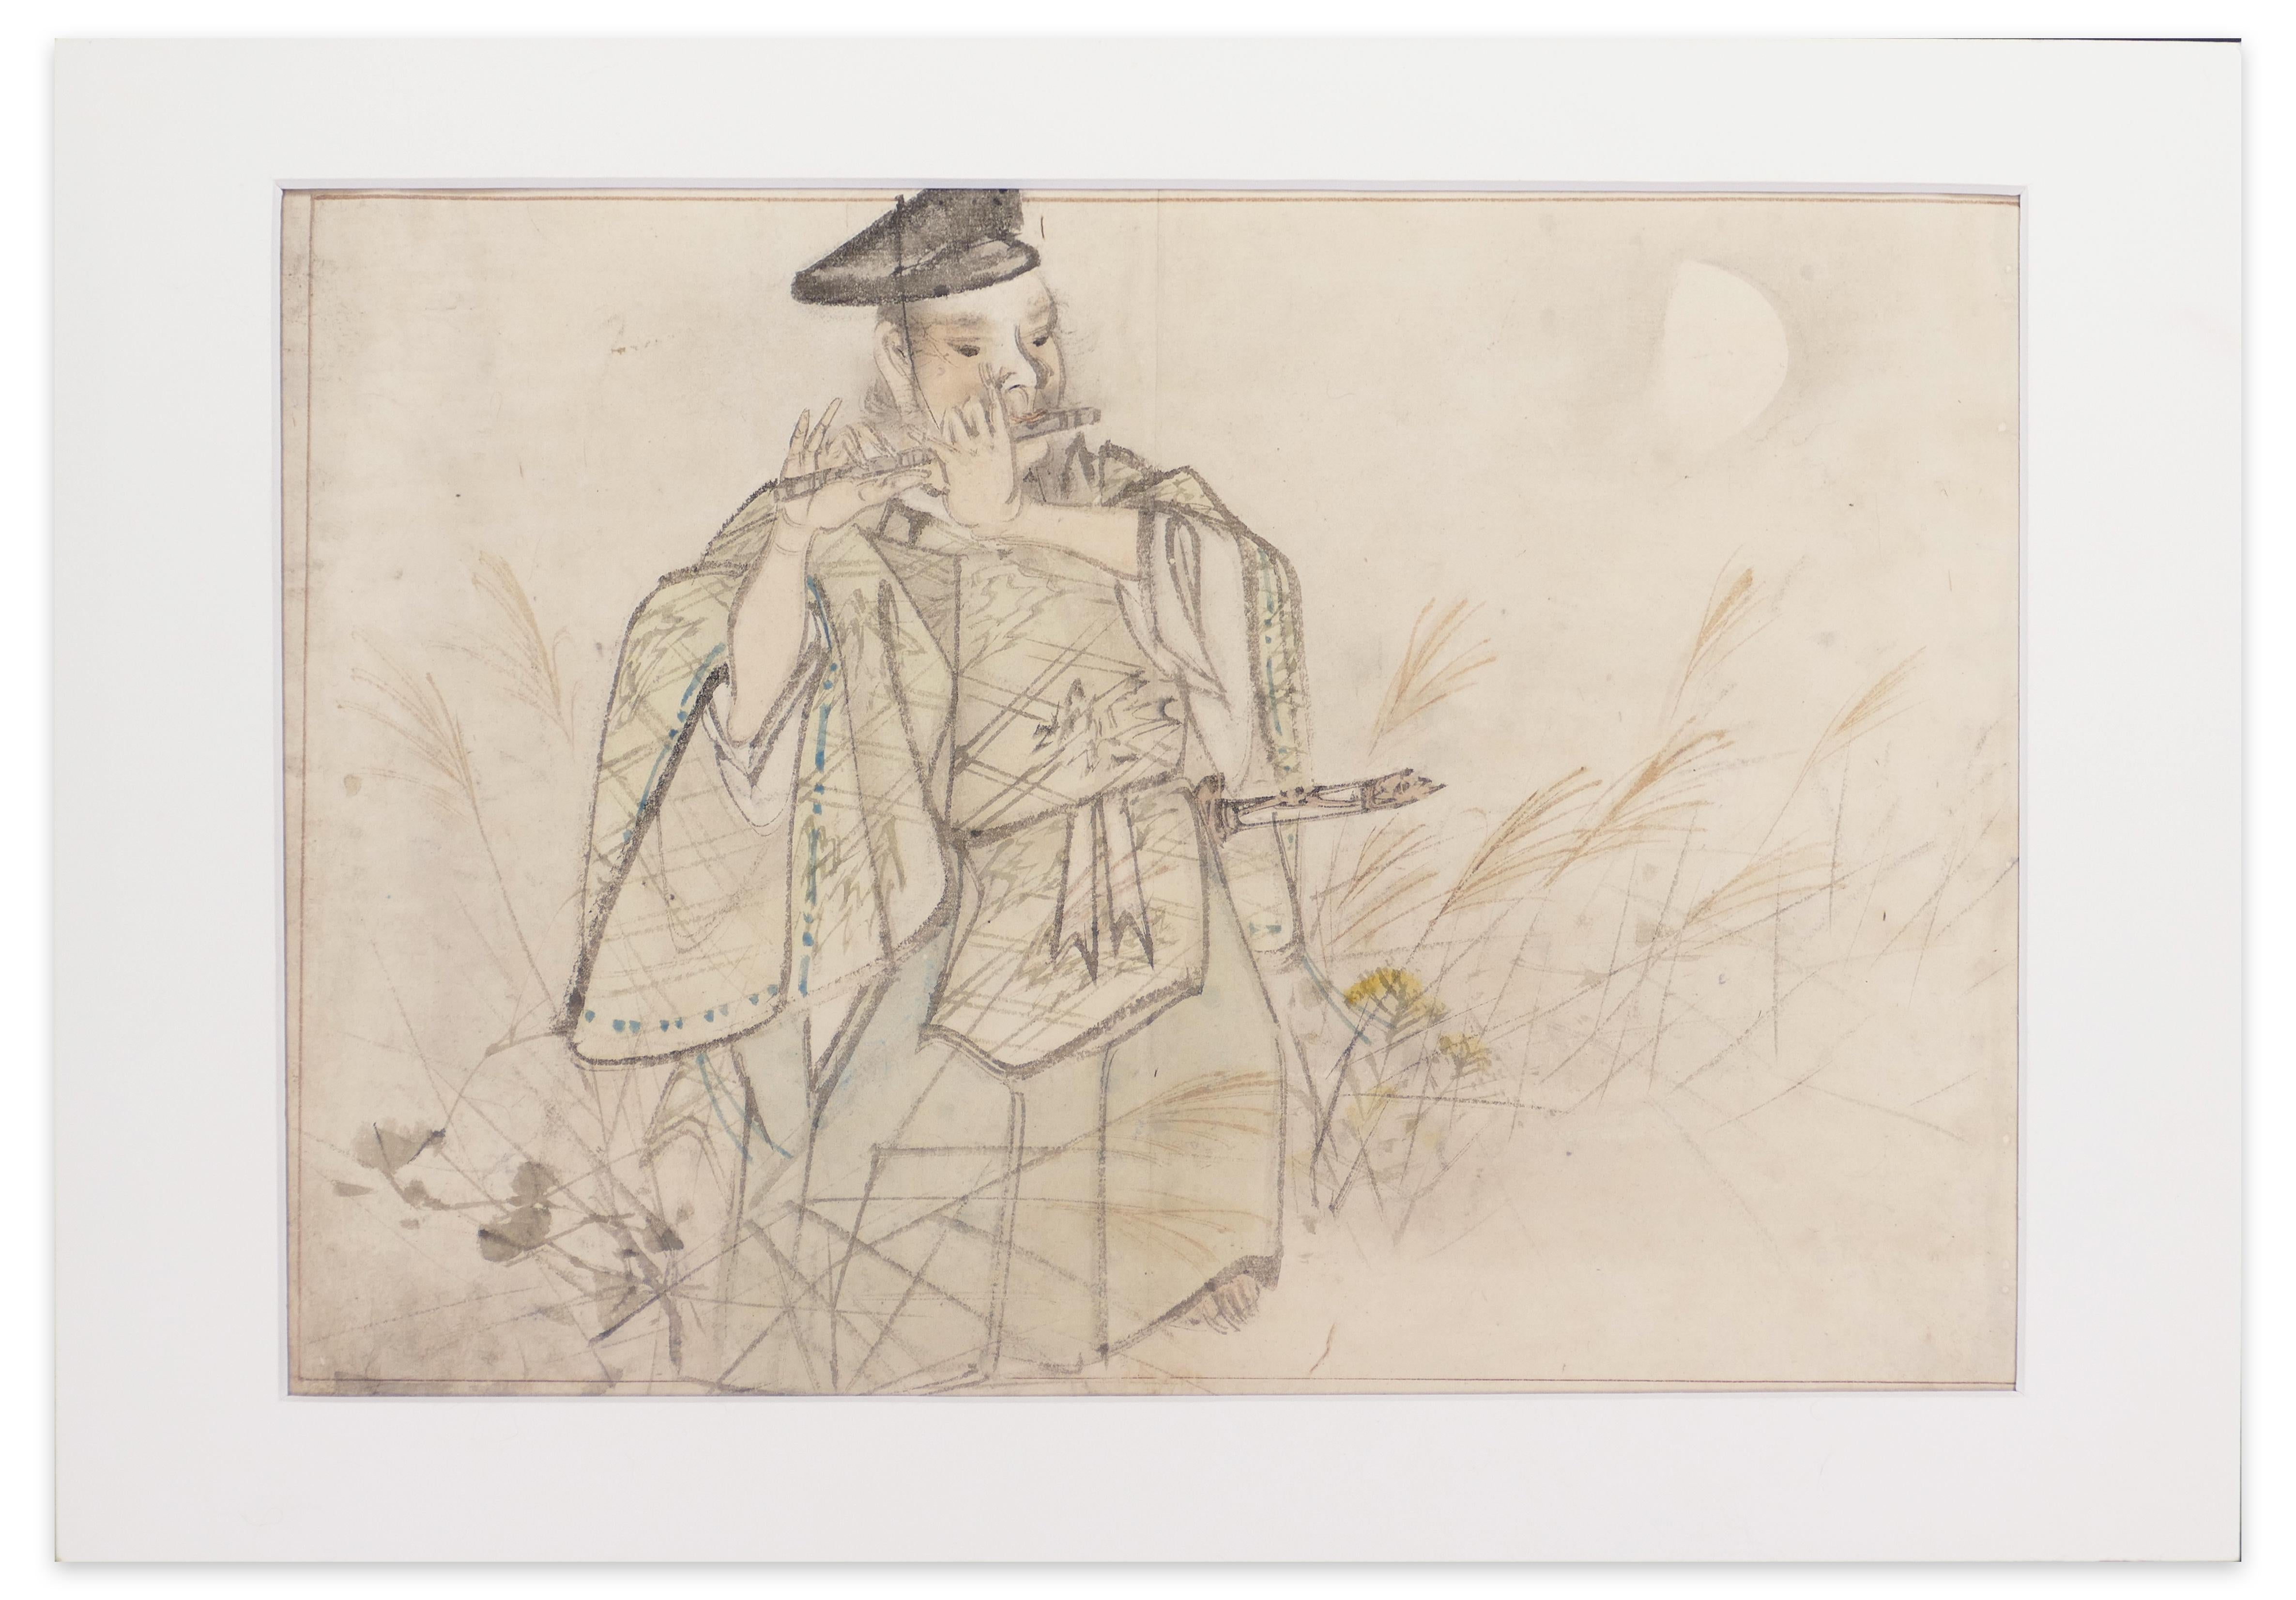 Unknown Figurative Art - Samurai Playing Flute - Mixed Media by Matsumura Keibun School - 1800